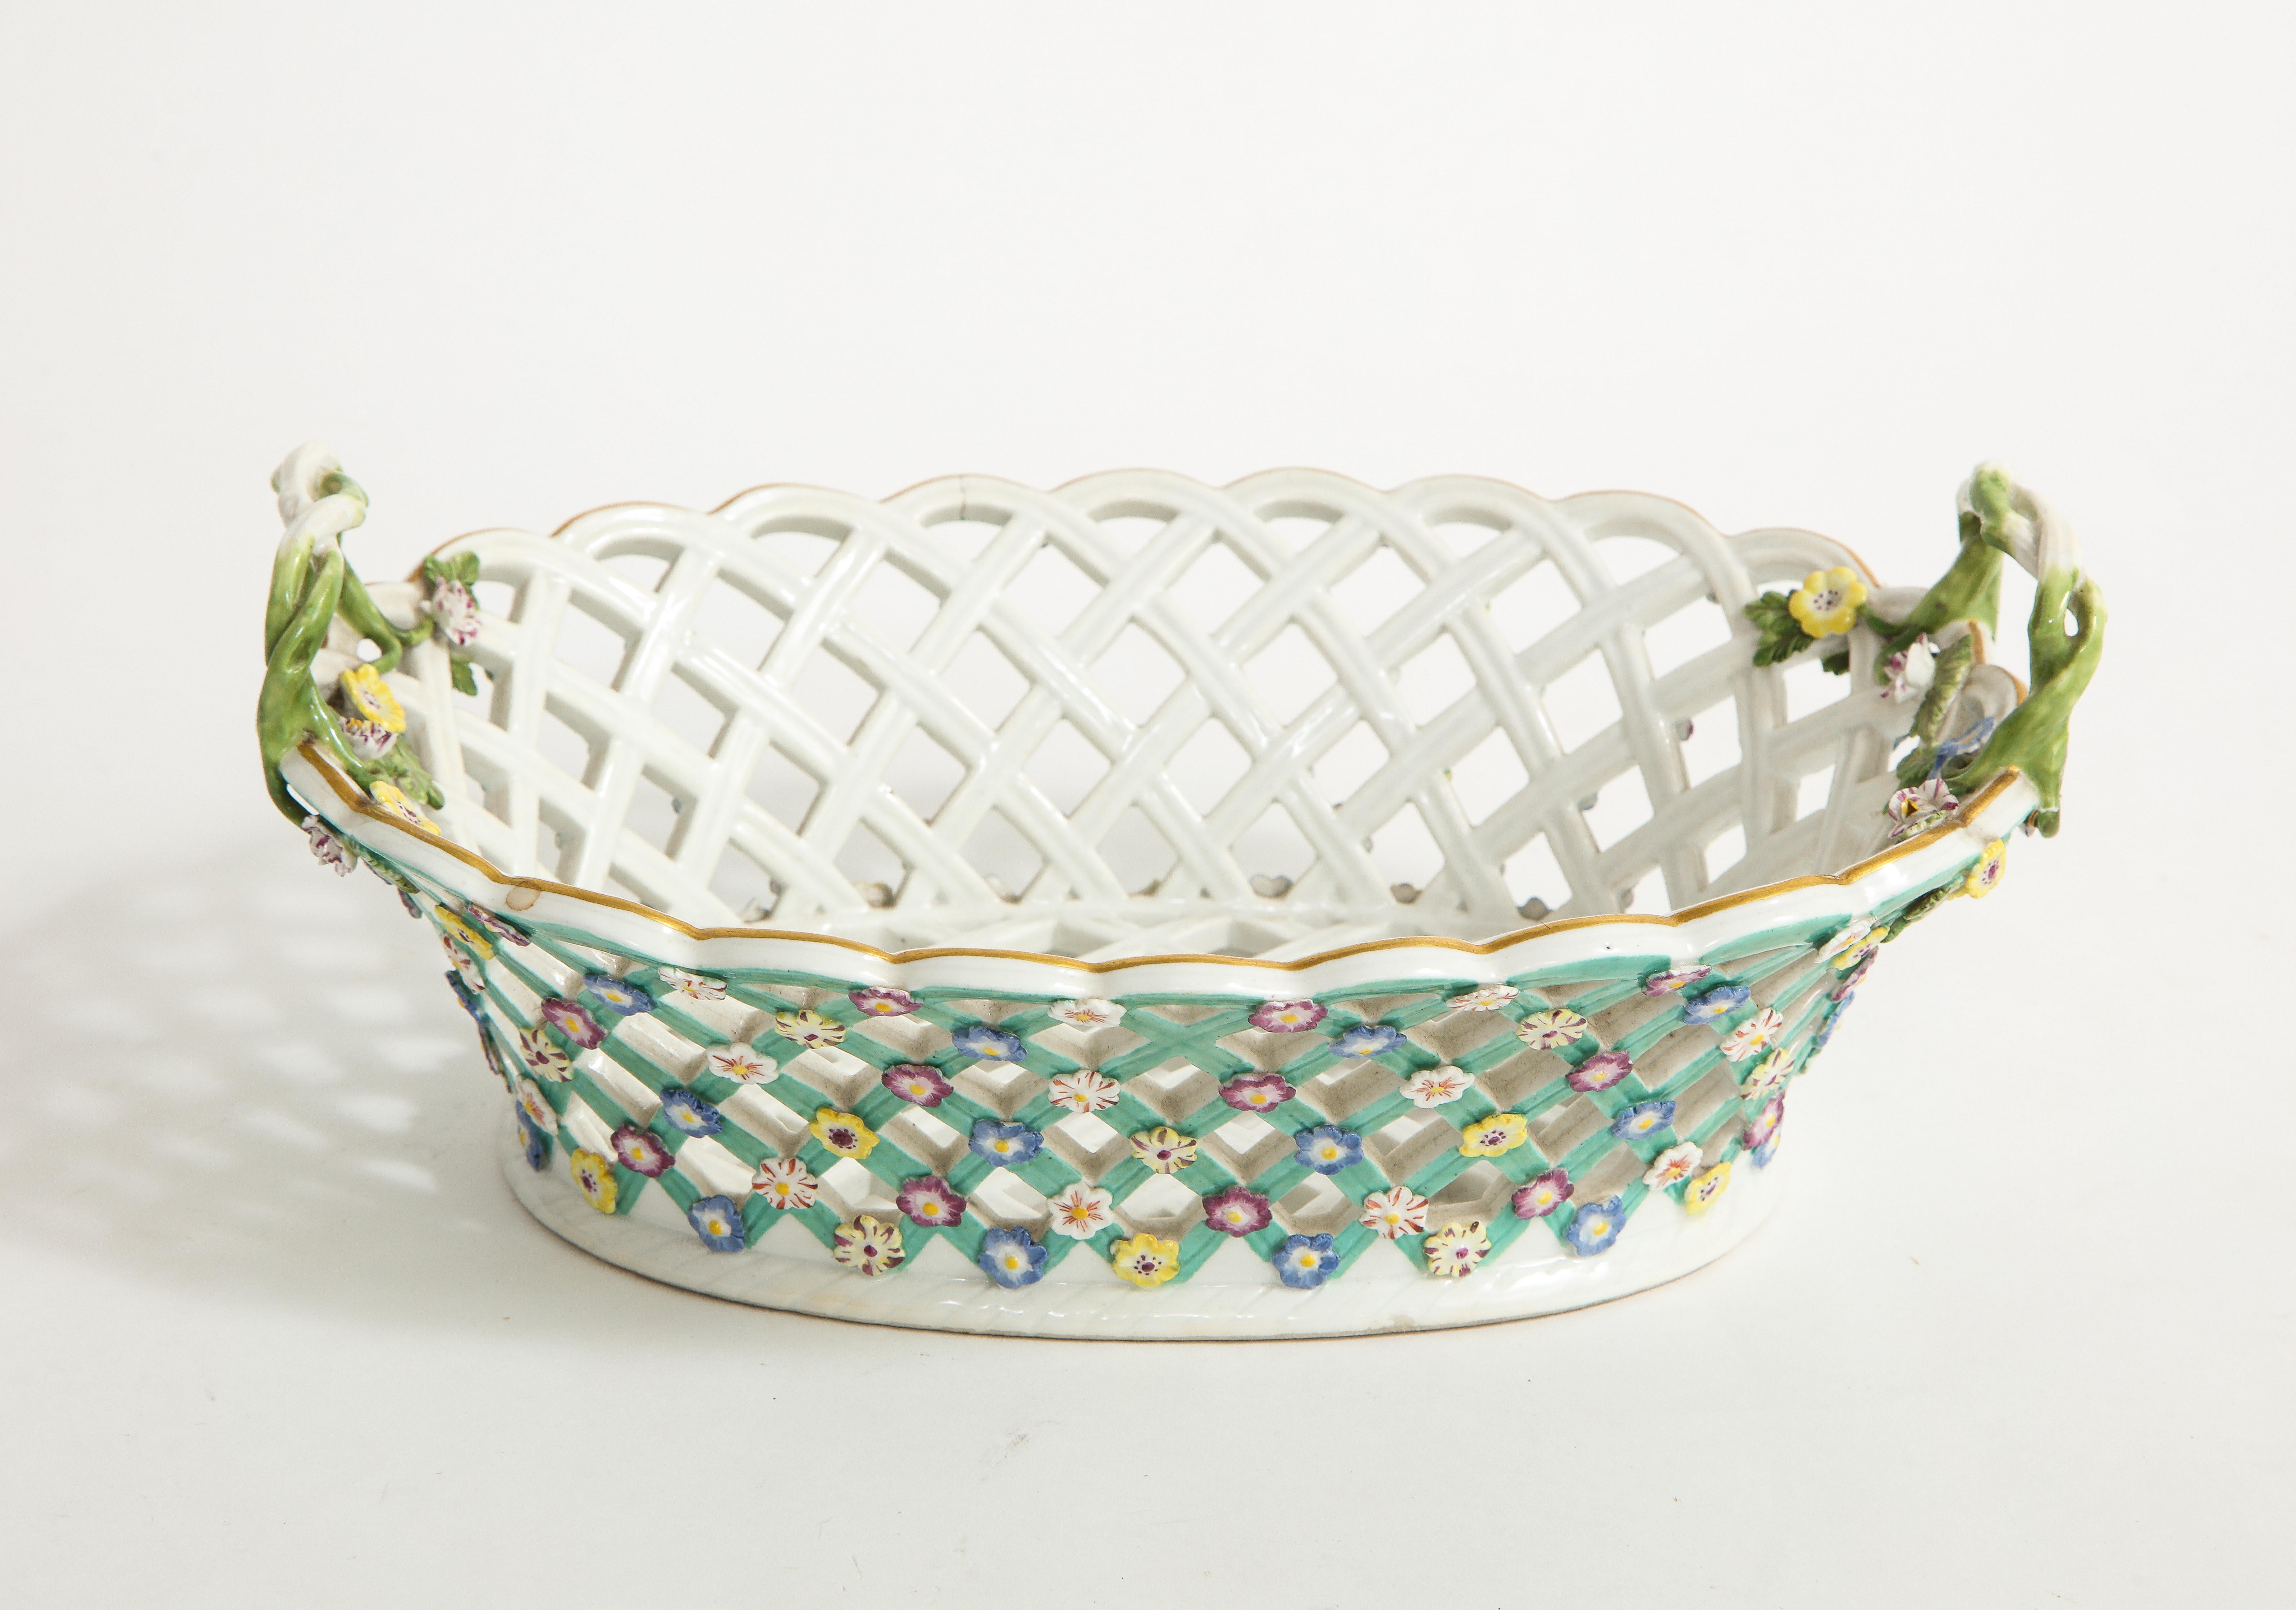 Meissen Porcelain 18. Jh. Gitterförmiger, filigraner, netzförmiger Korb mit Rankengriffen (Louis XVI.) im Angebot